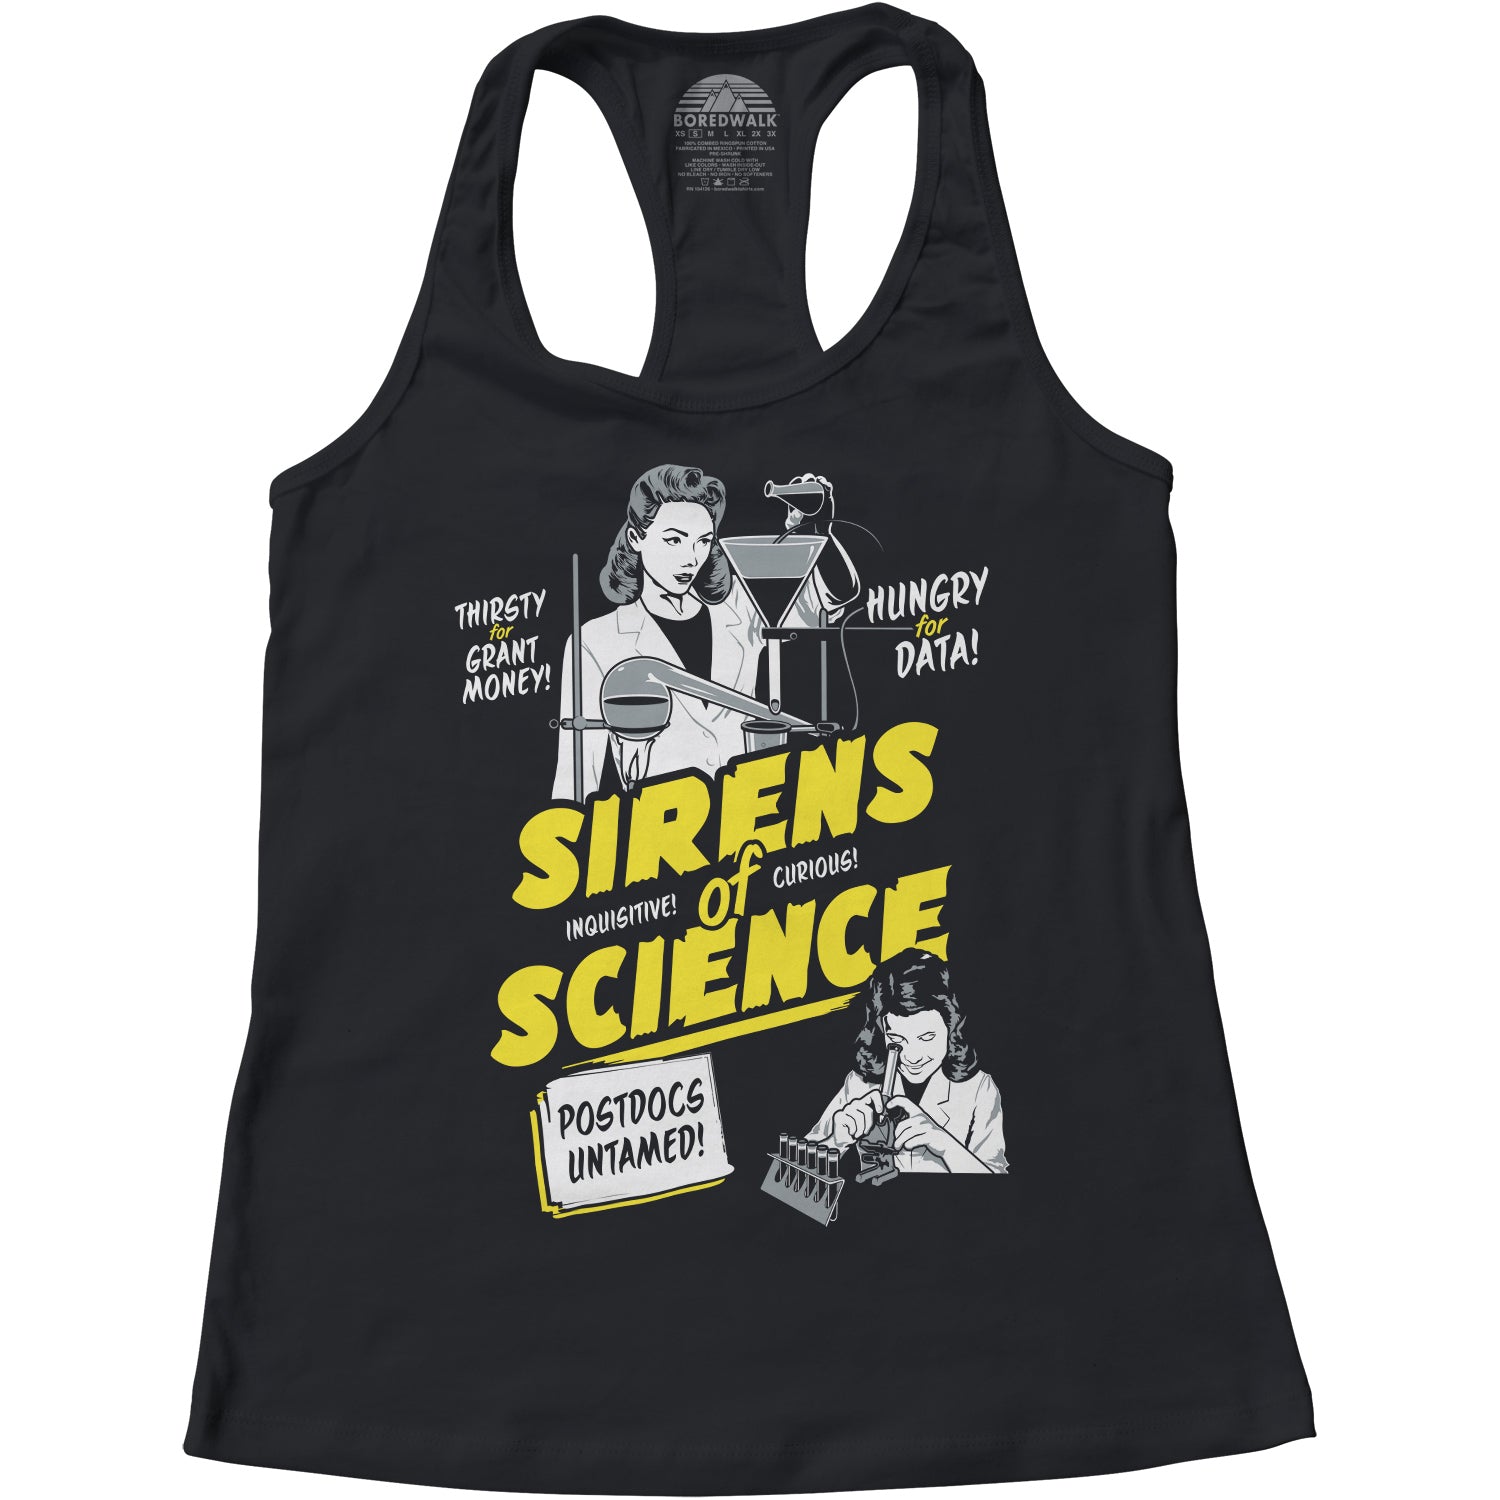 Women's Sirens of Science Racerback Tank Top